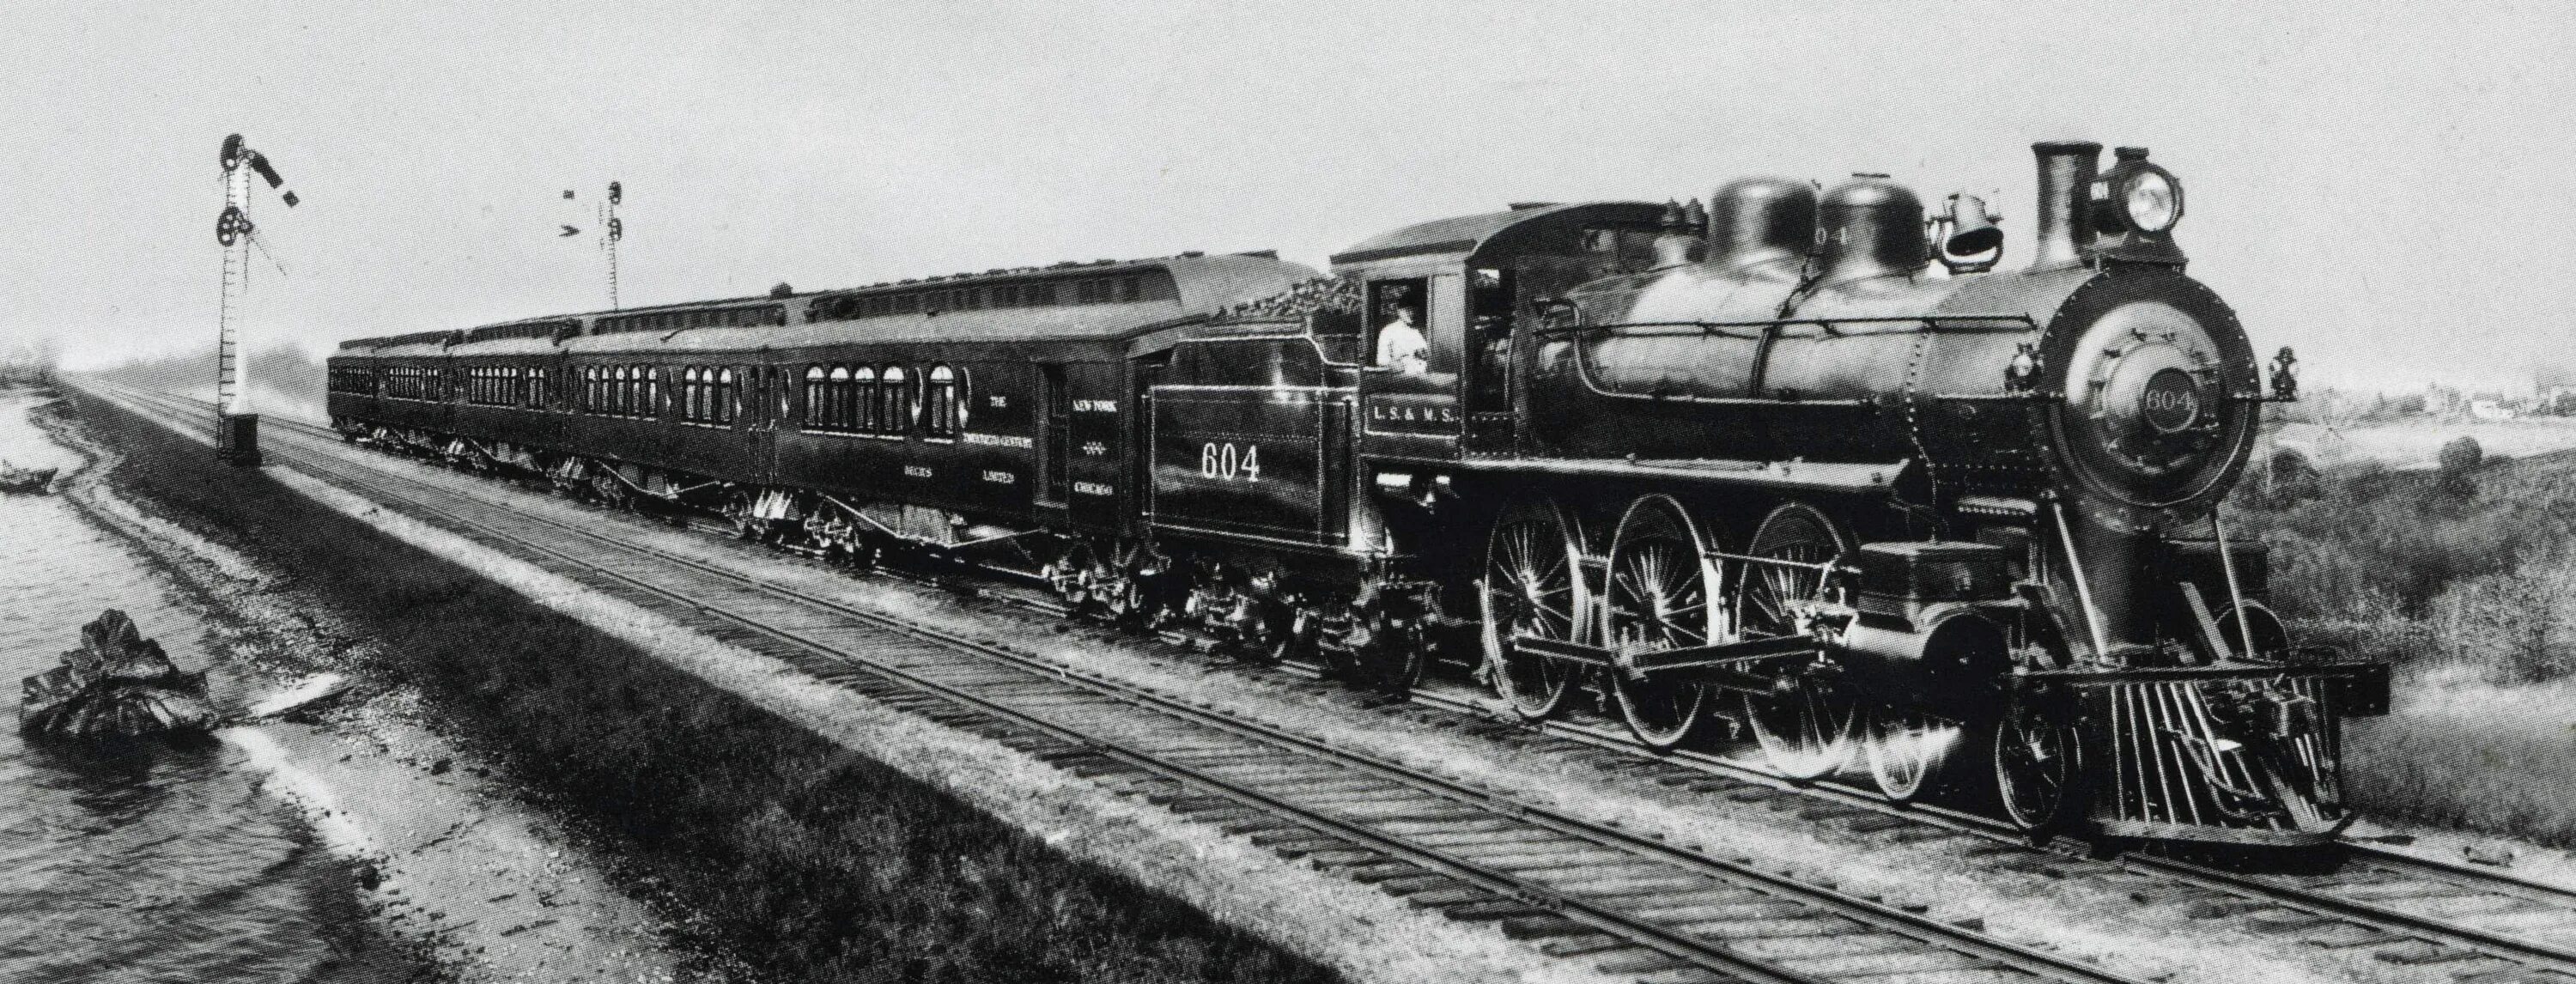 Железная дорога 20 века. Поезд 20 век. Поезд начала 20 века. Поезд 19 век.